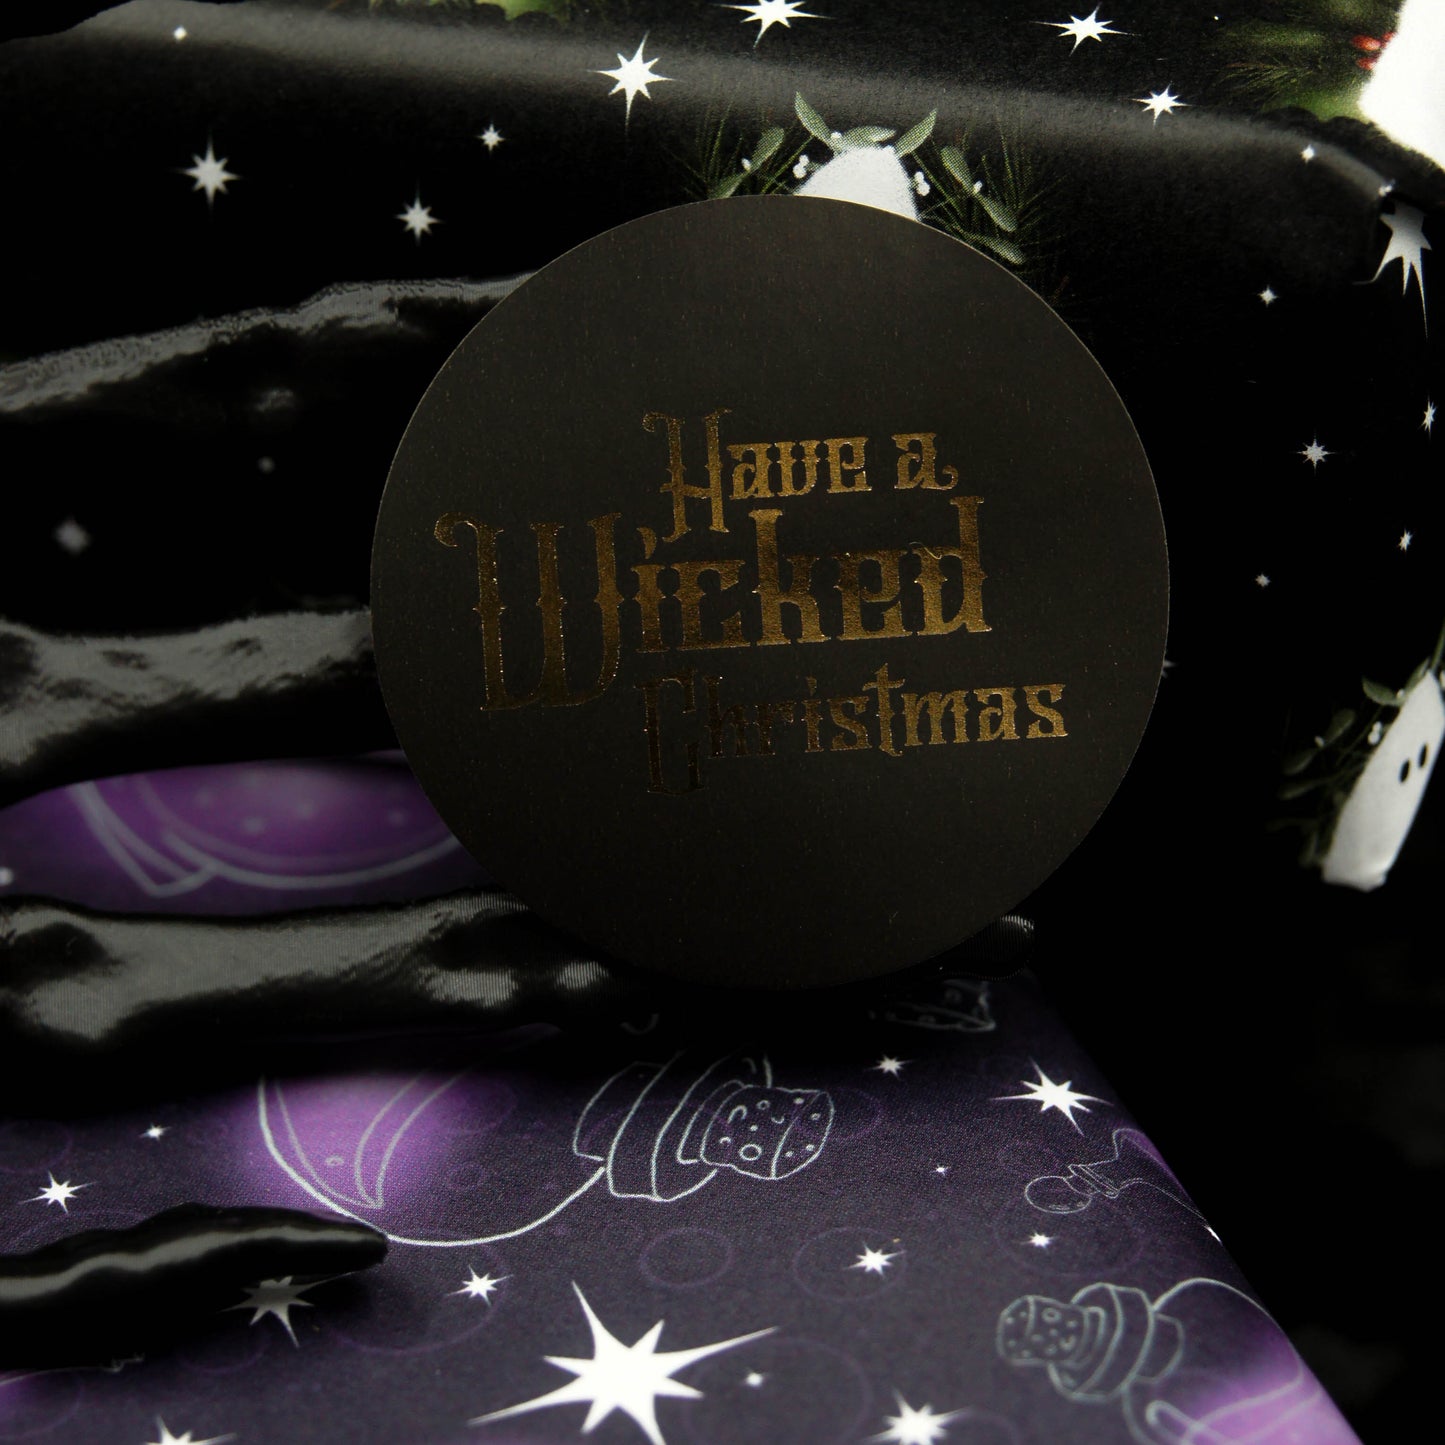 Wicked Christmas Gothic Christmas Stickers | Elegantly Gothic